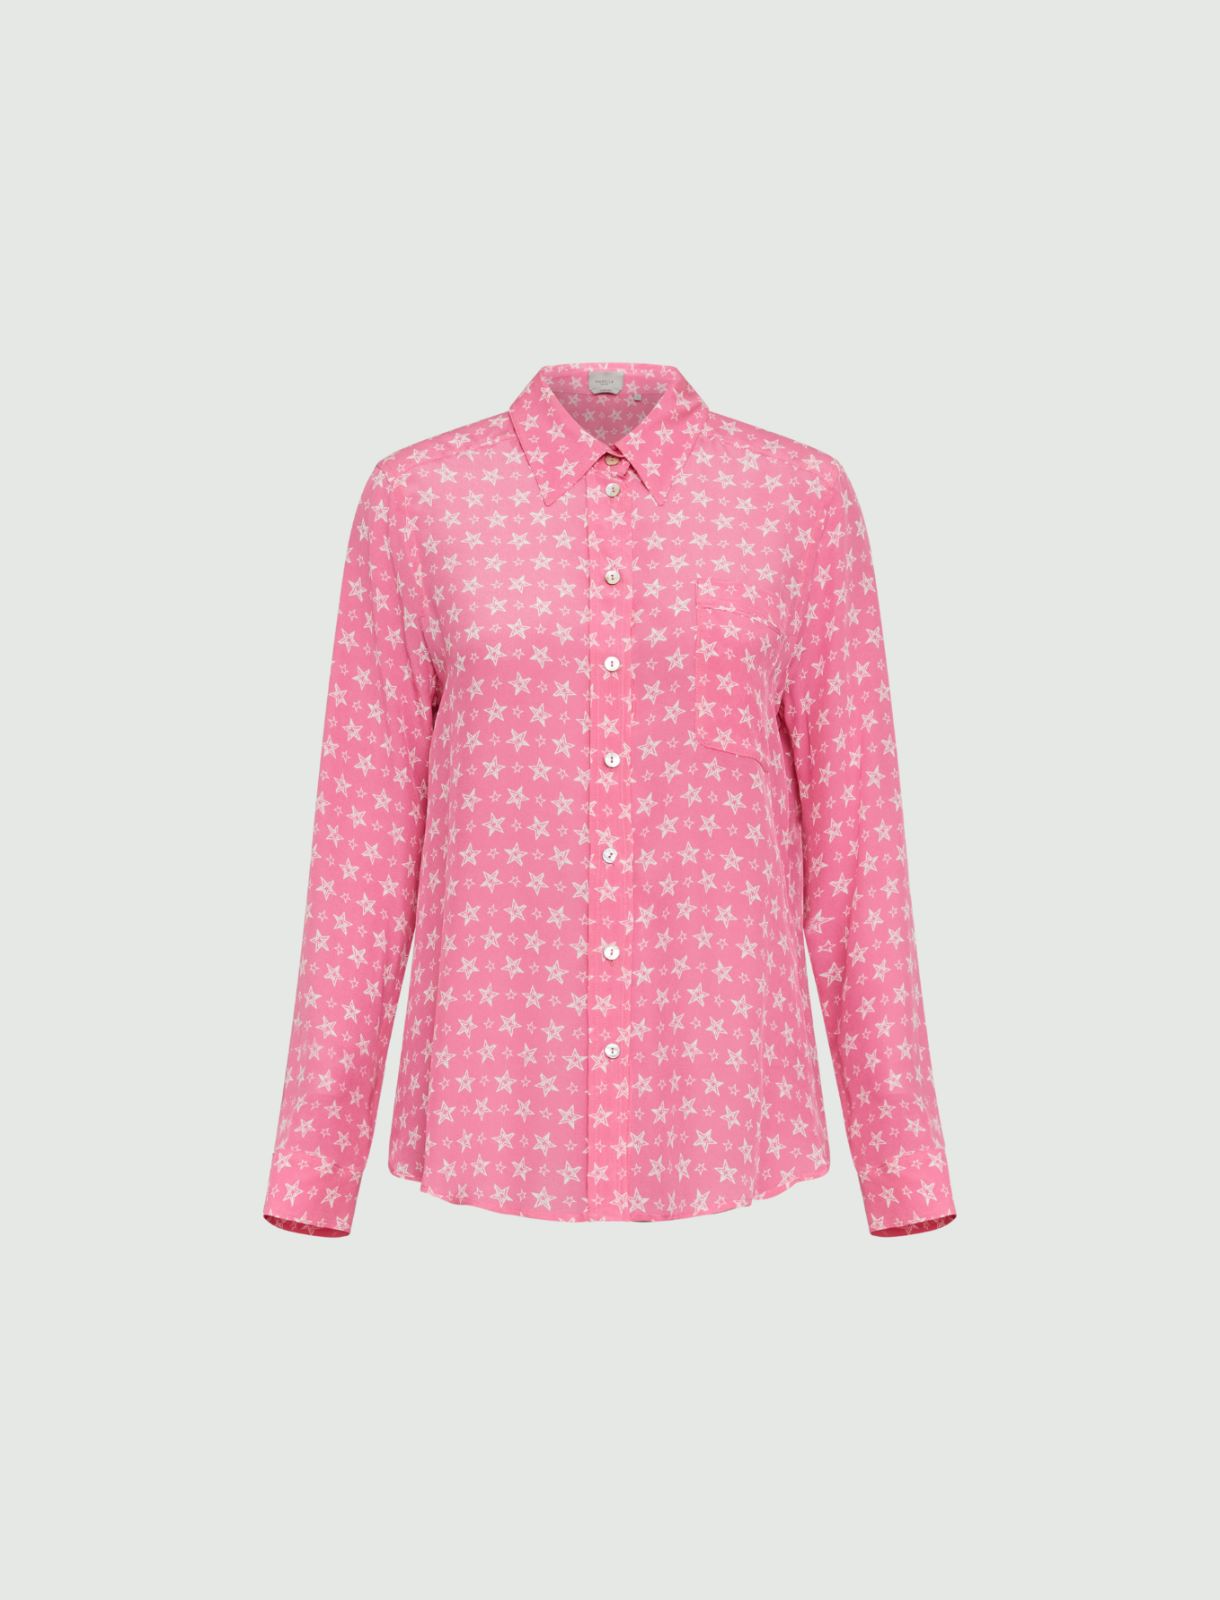 Patterned shirt - Shocking pink - Marina Rinaldi - 5